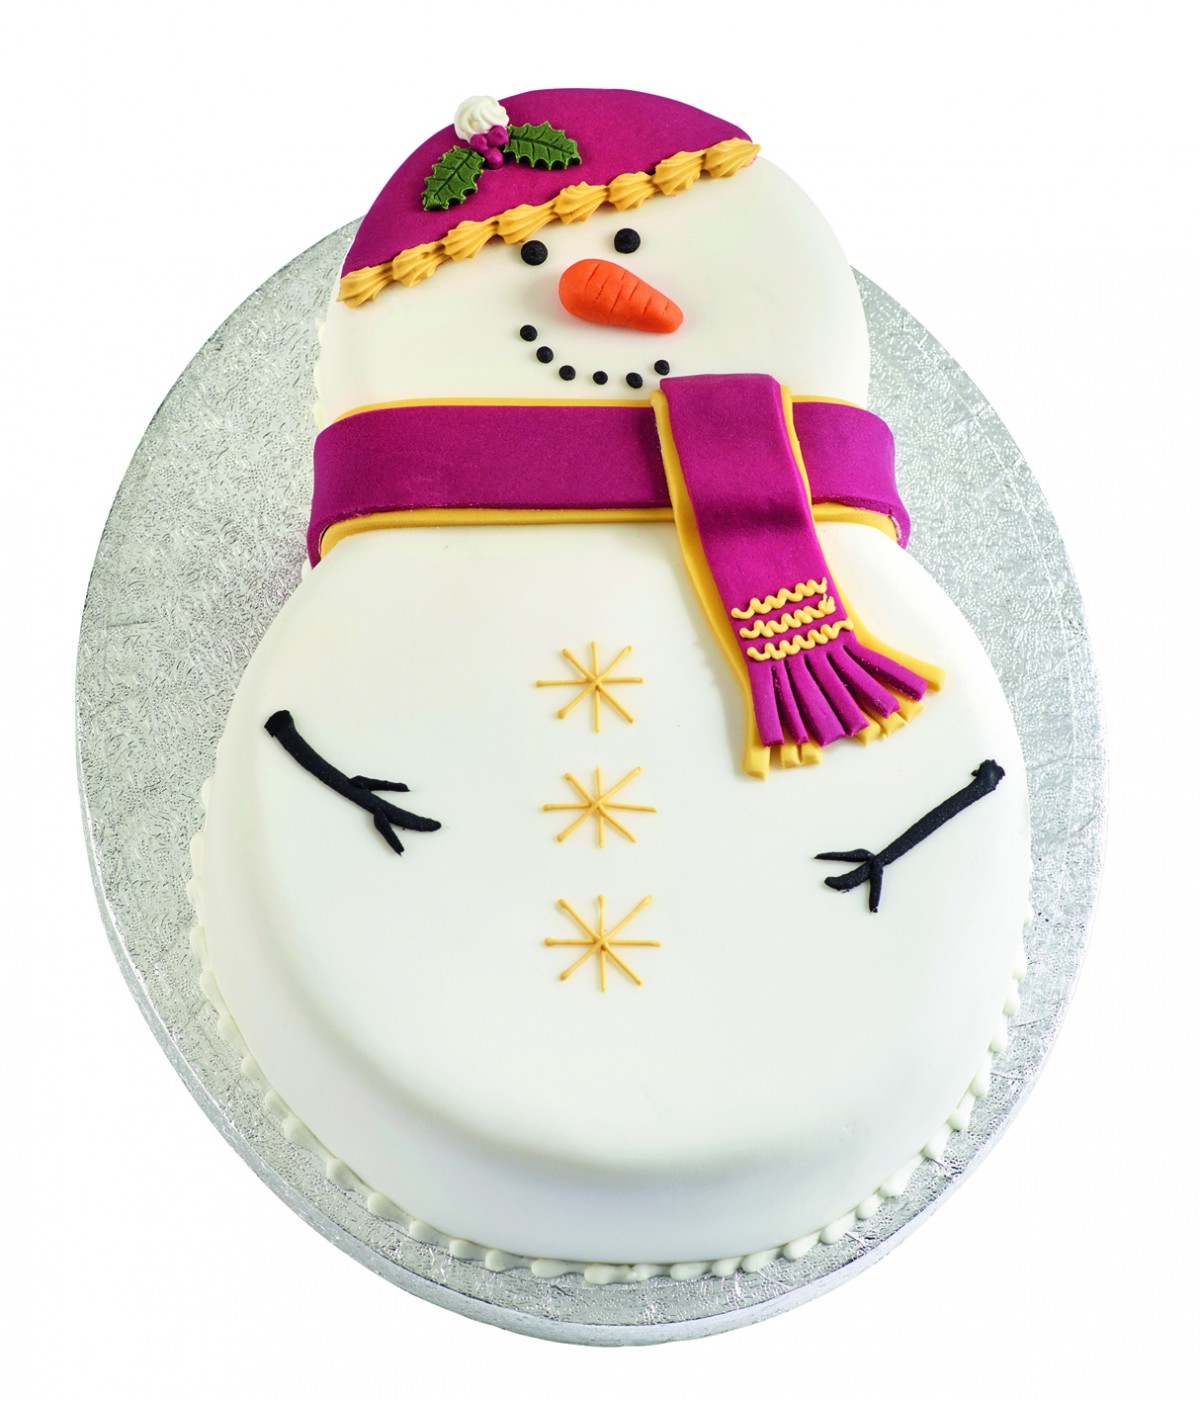 Snowman Chocolate Cake.jpg